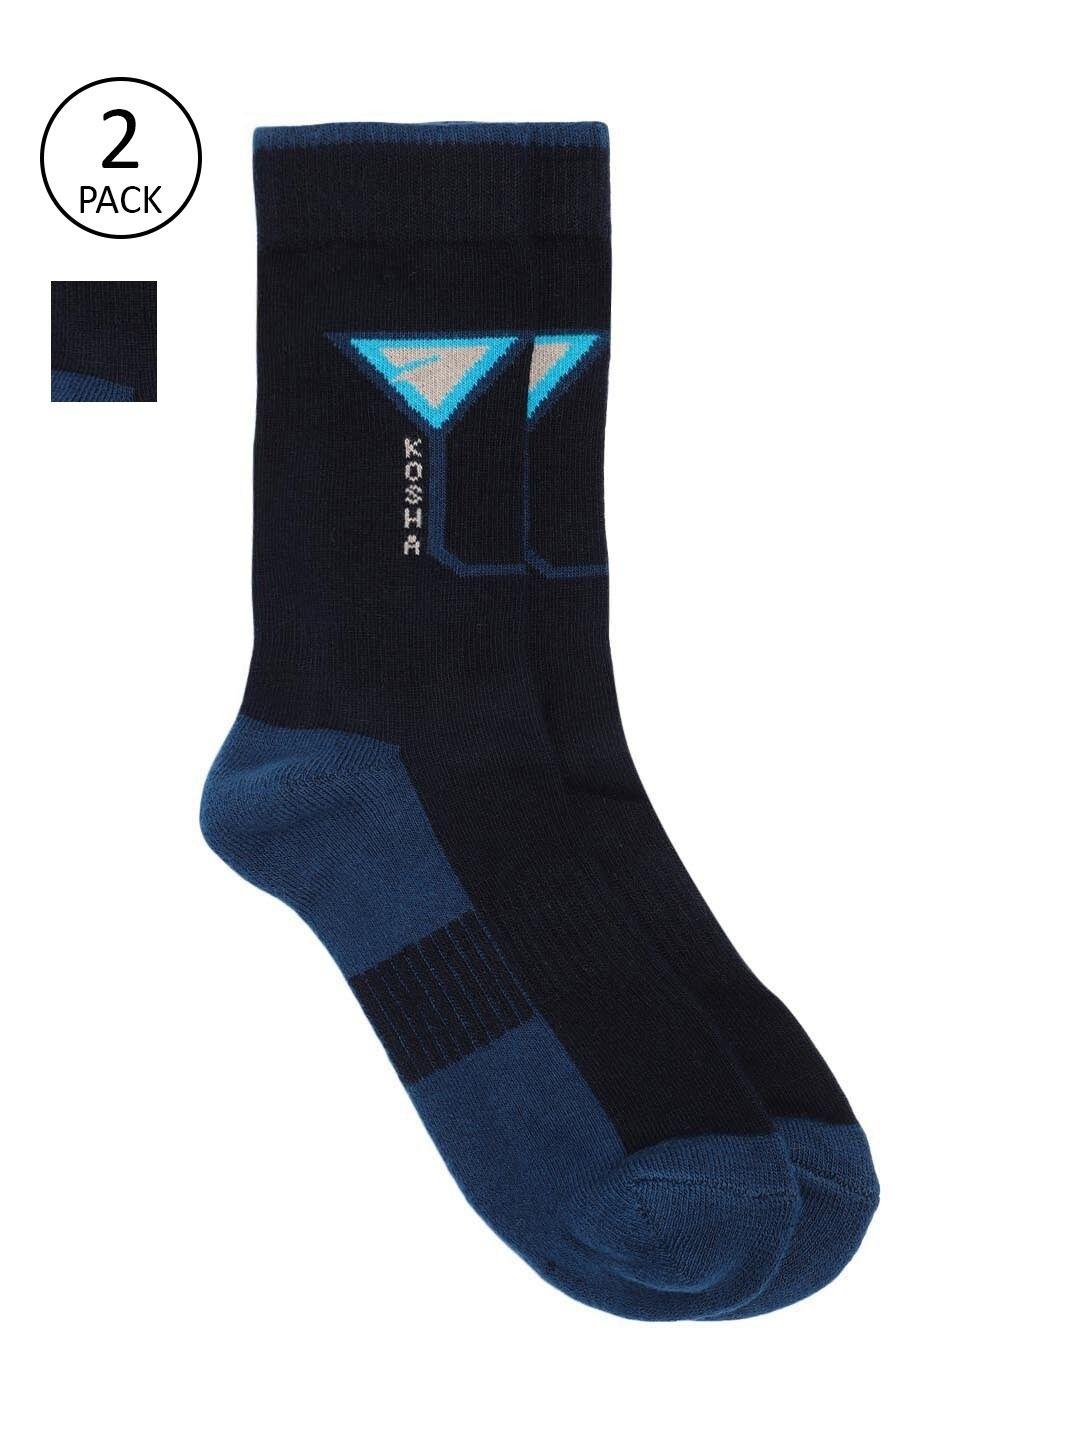 kosha men pack of 2 blue & black calf length cushioned cotton sports socks